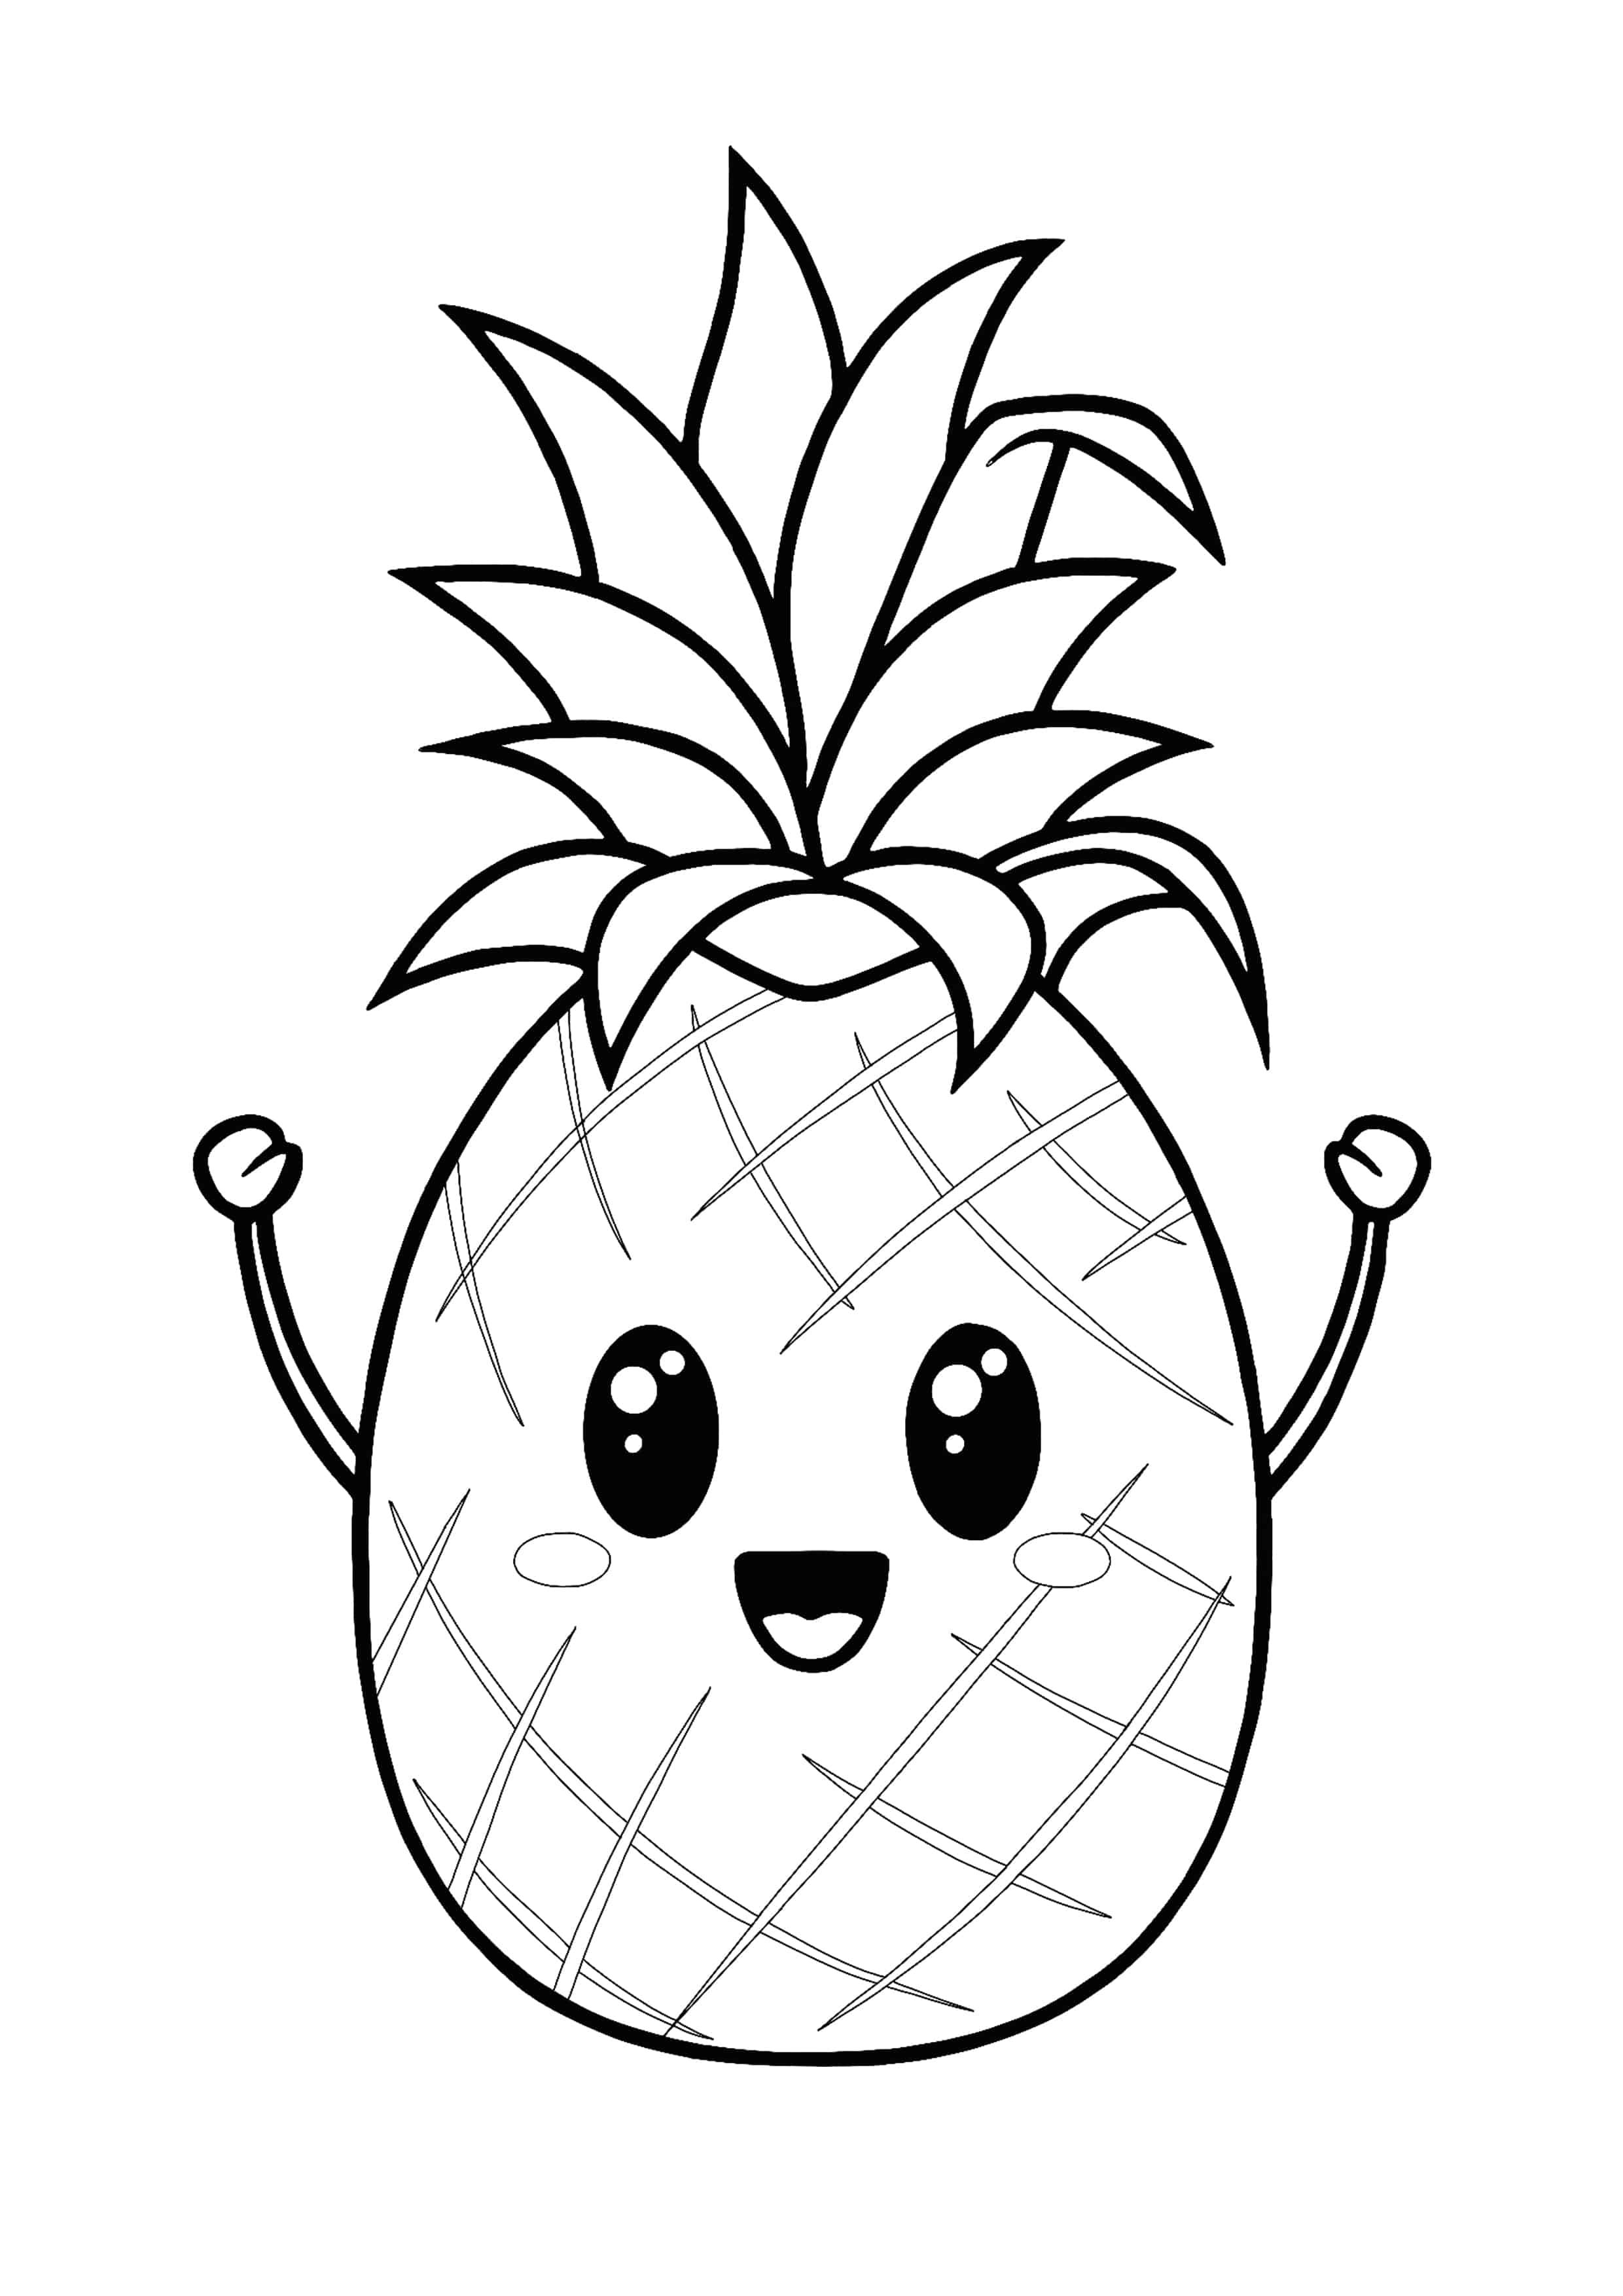 Cute kawaii pineapple coloring page fruit coloring pages coloring pages cute coloring pages